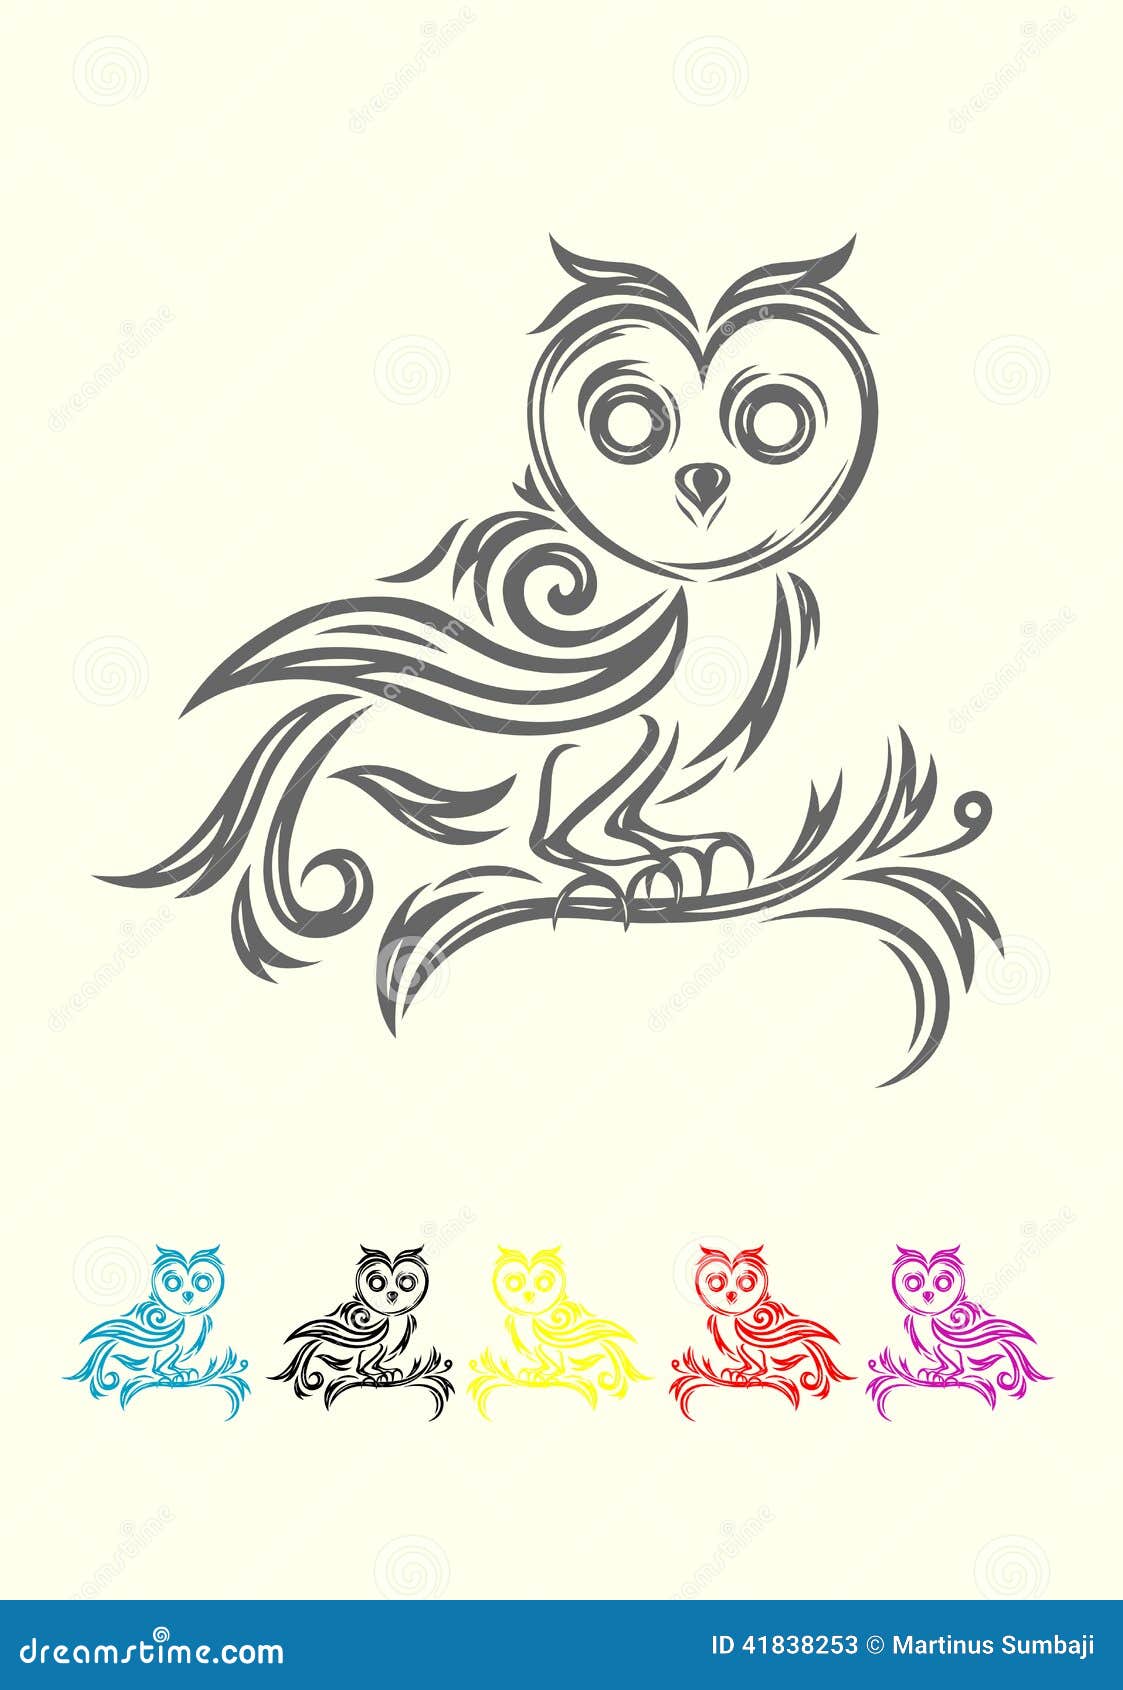 Owl tribal stock vector. Illustration of animal, circle - 41838253